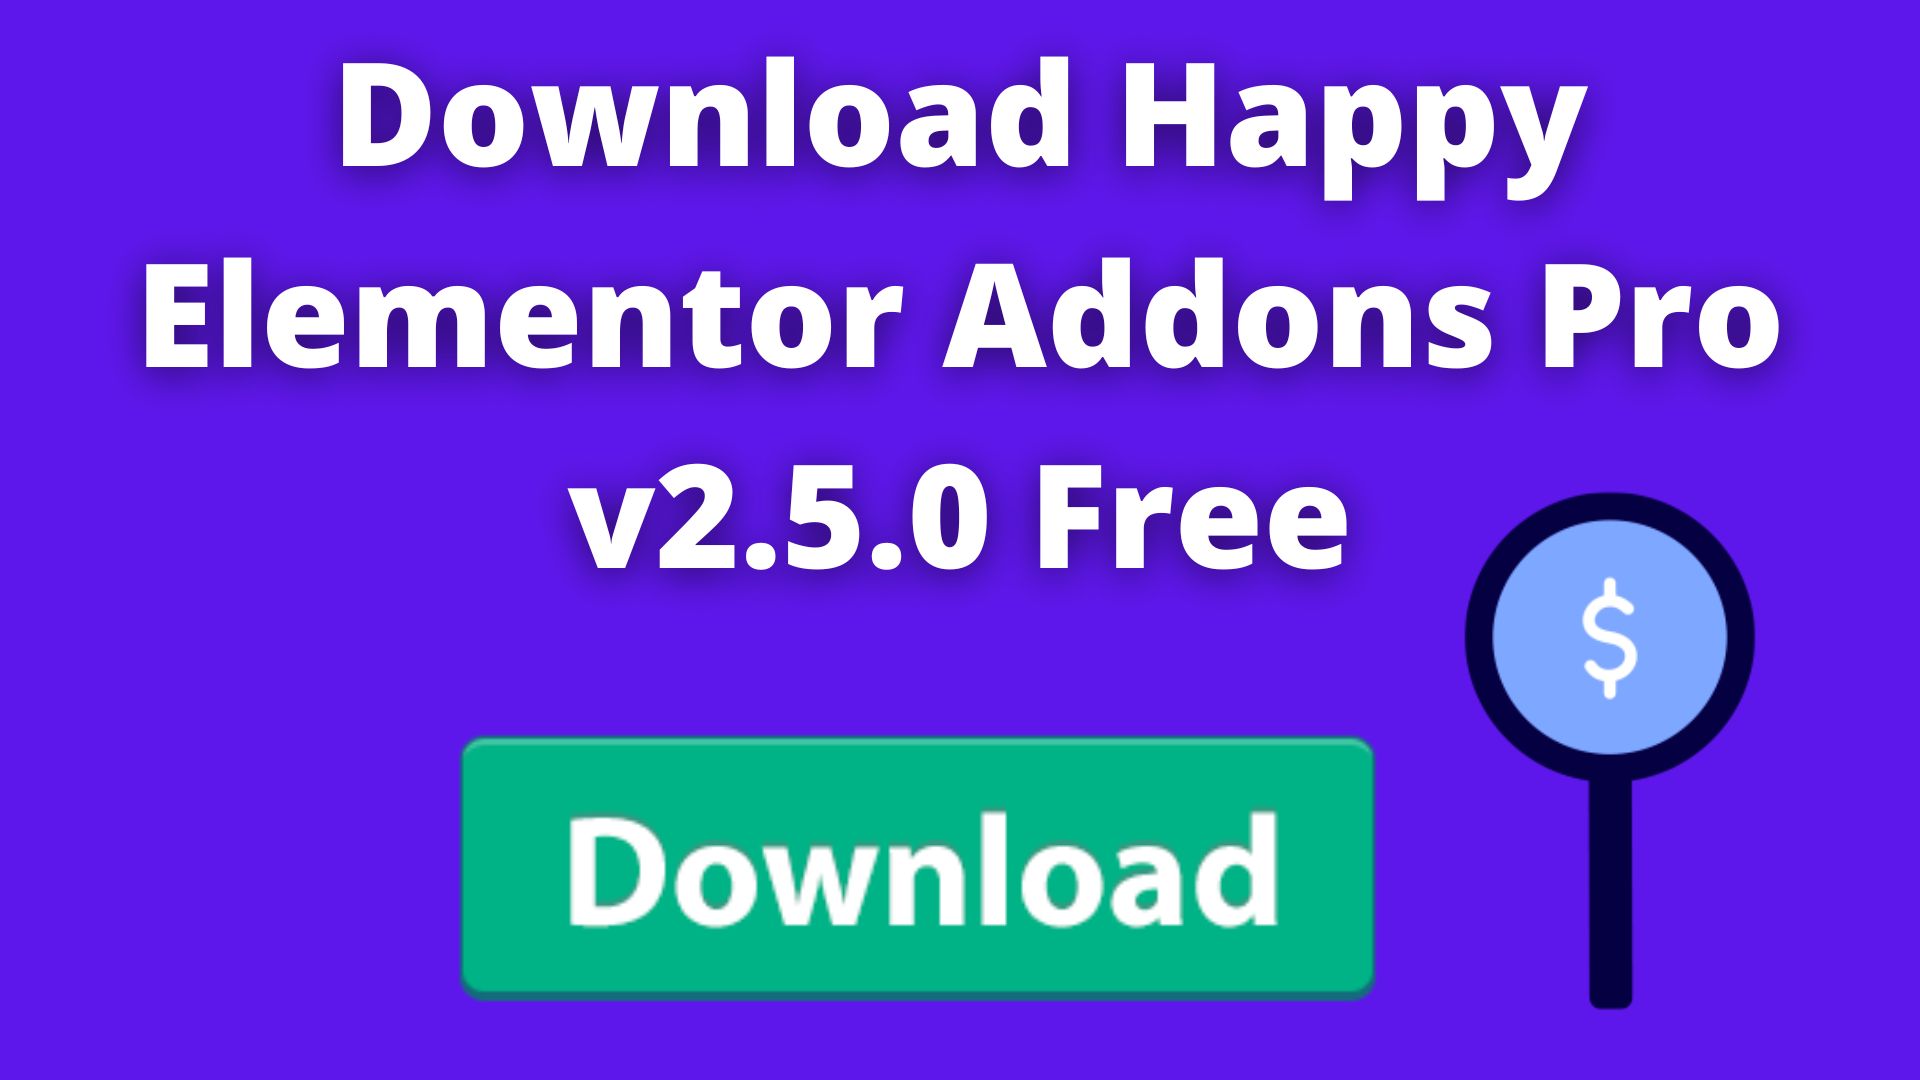 Download happy elementor addons pro v2. 5. 0 free